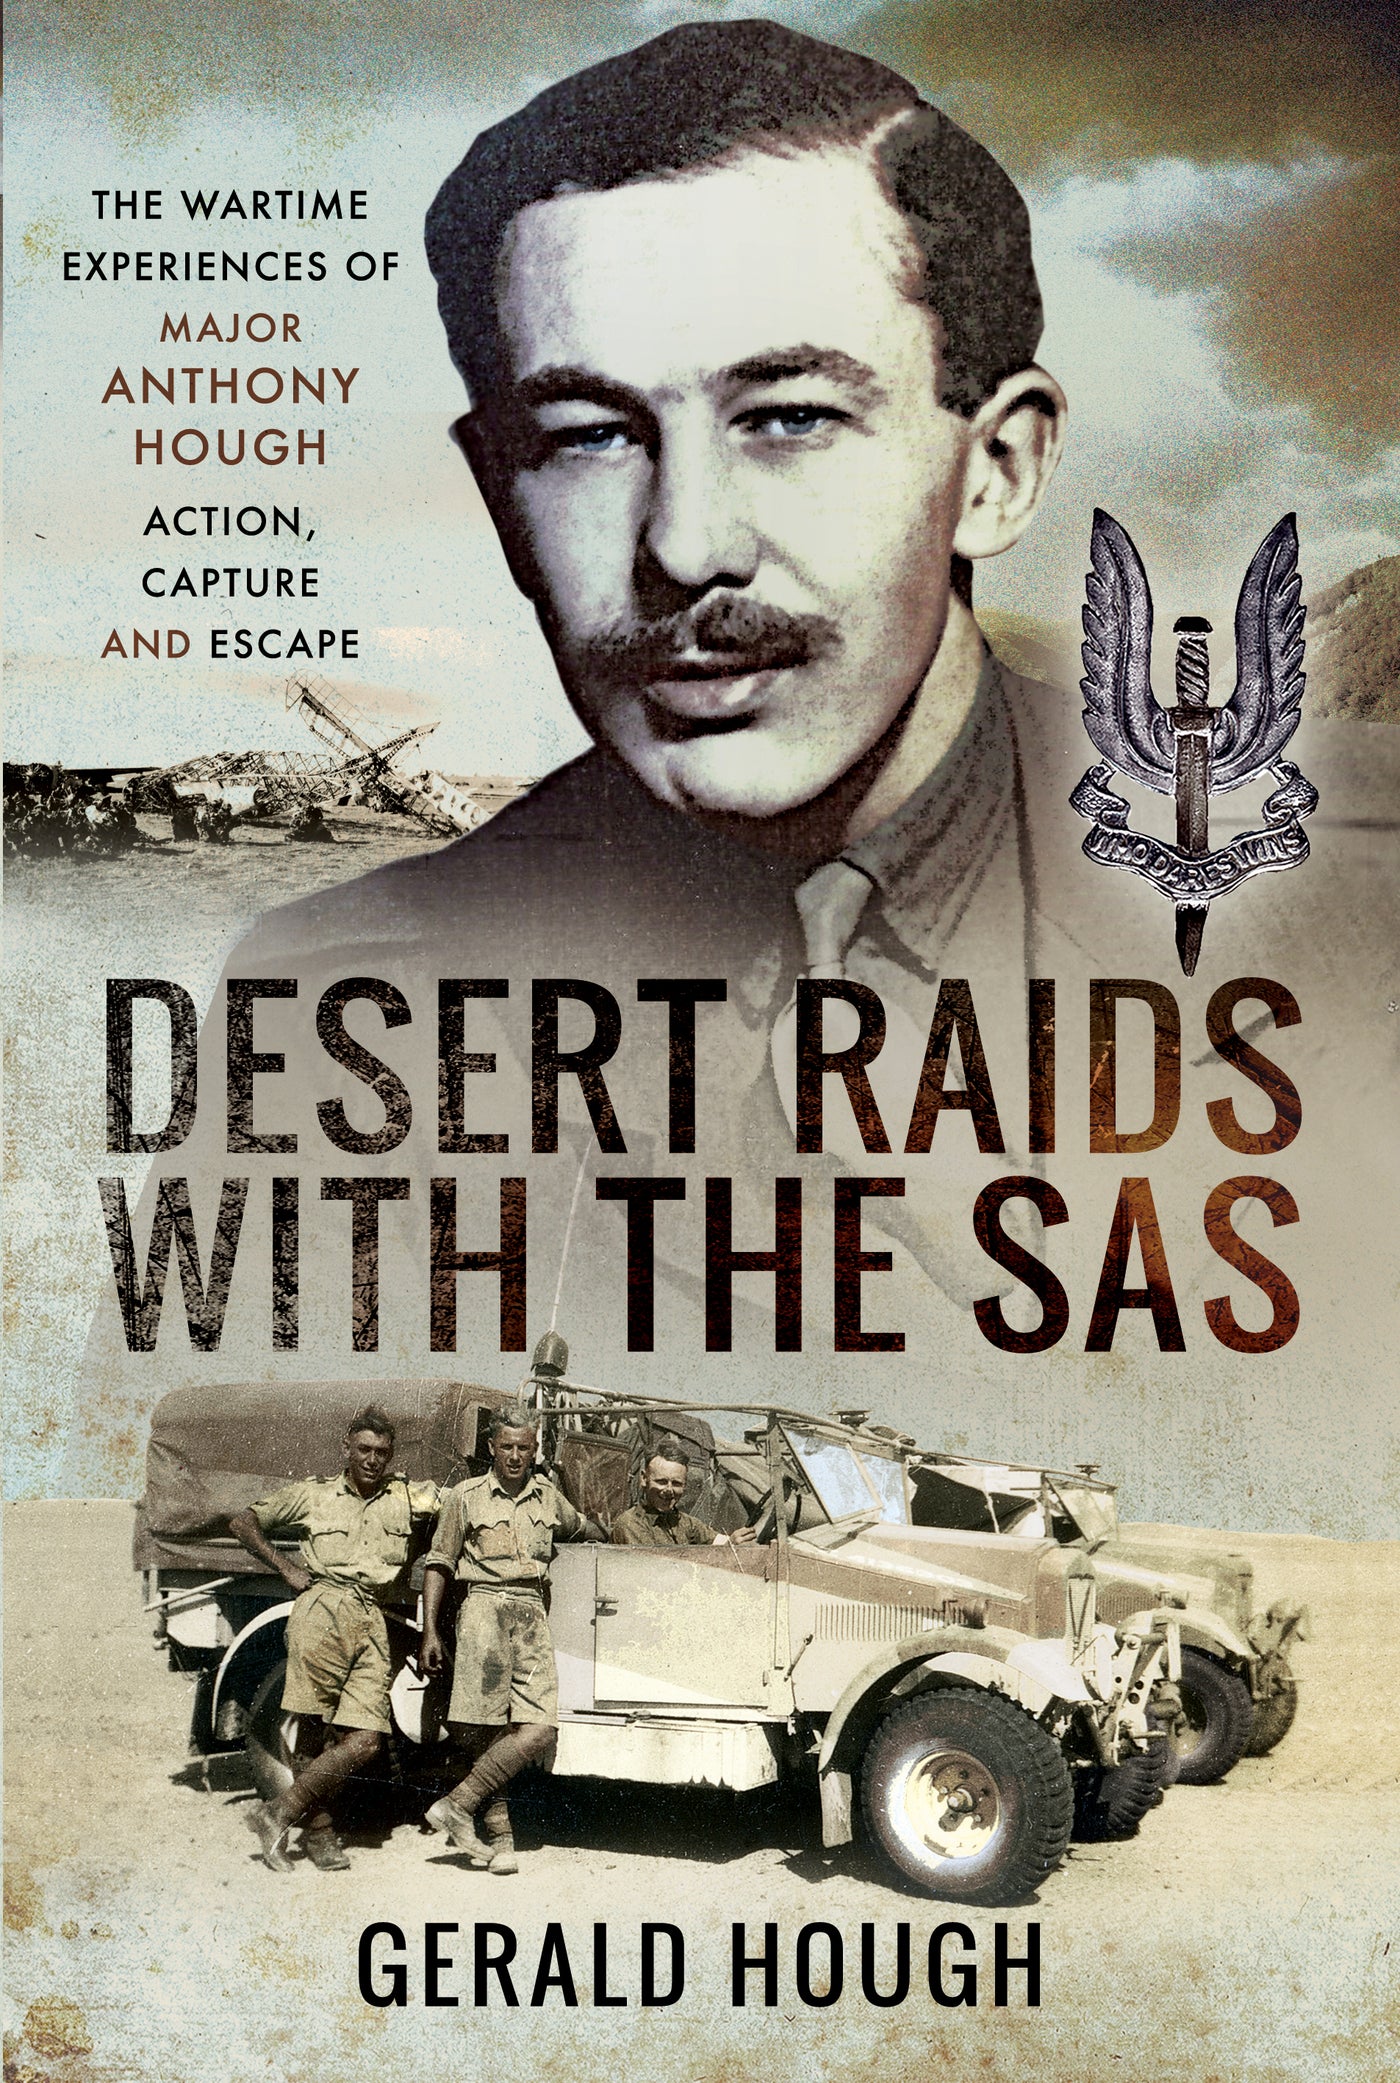 Desert Raids with the SAS